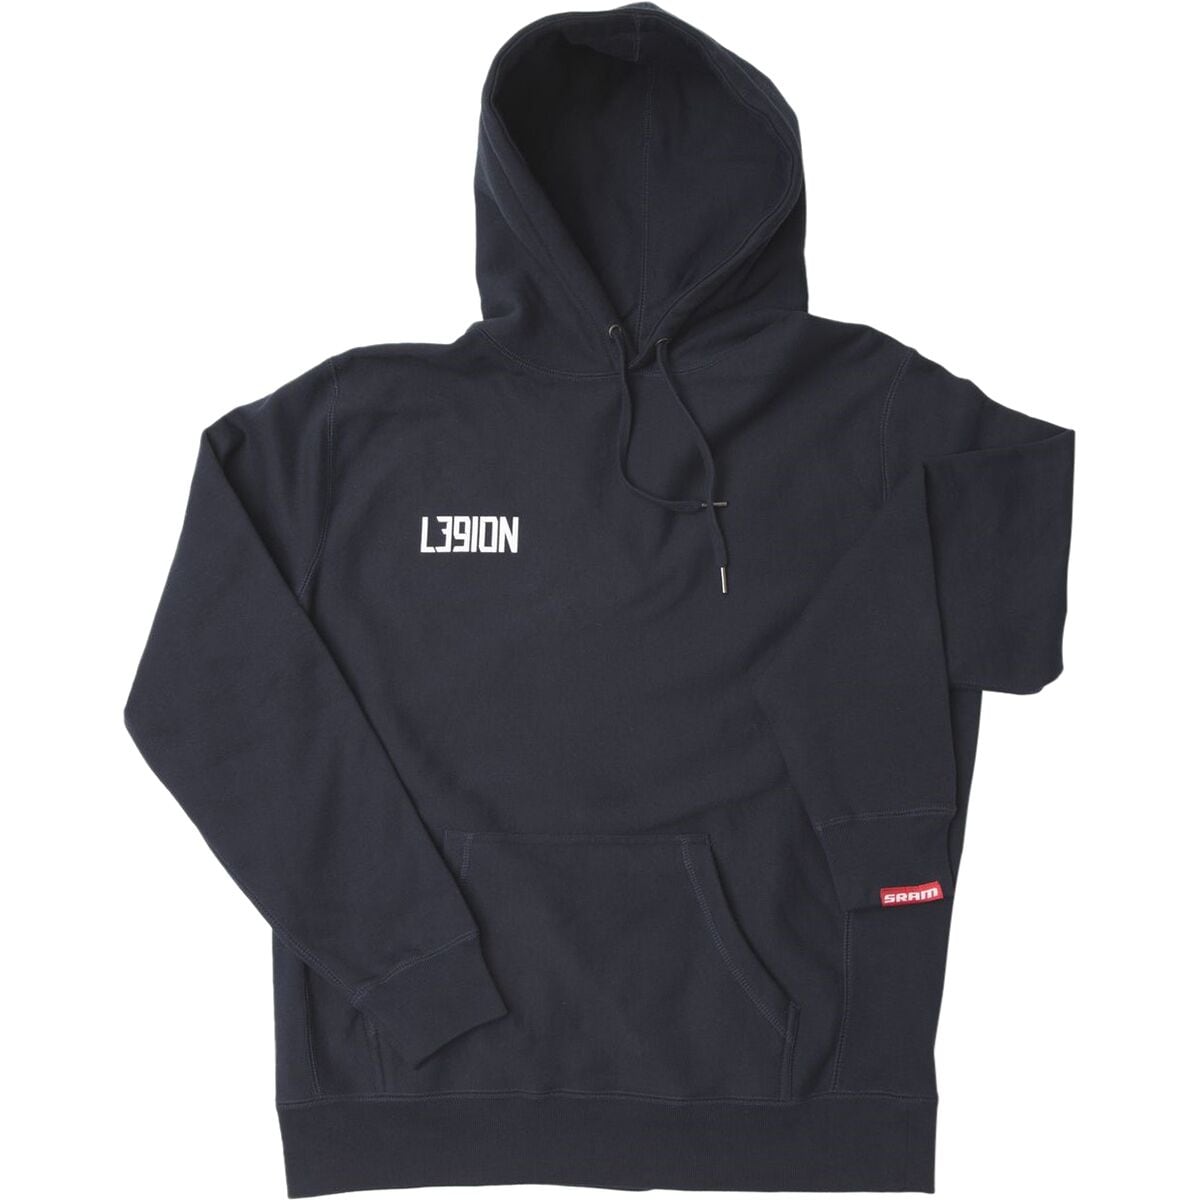 SRAM L39ION Logo Sweatshirt